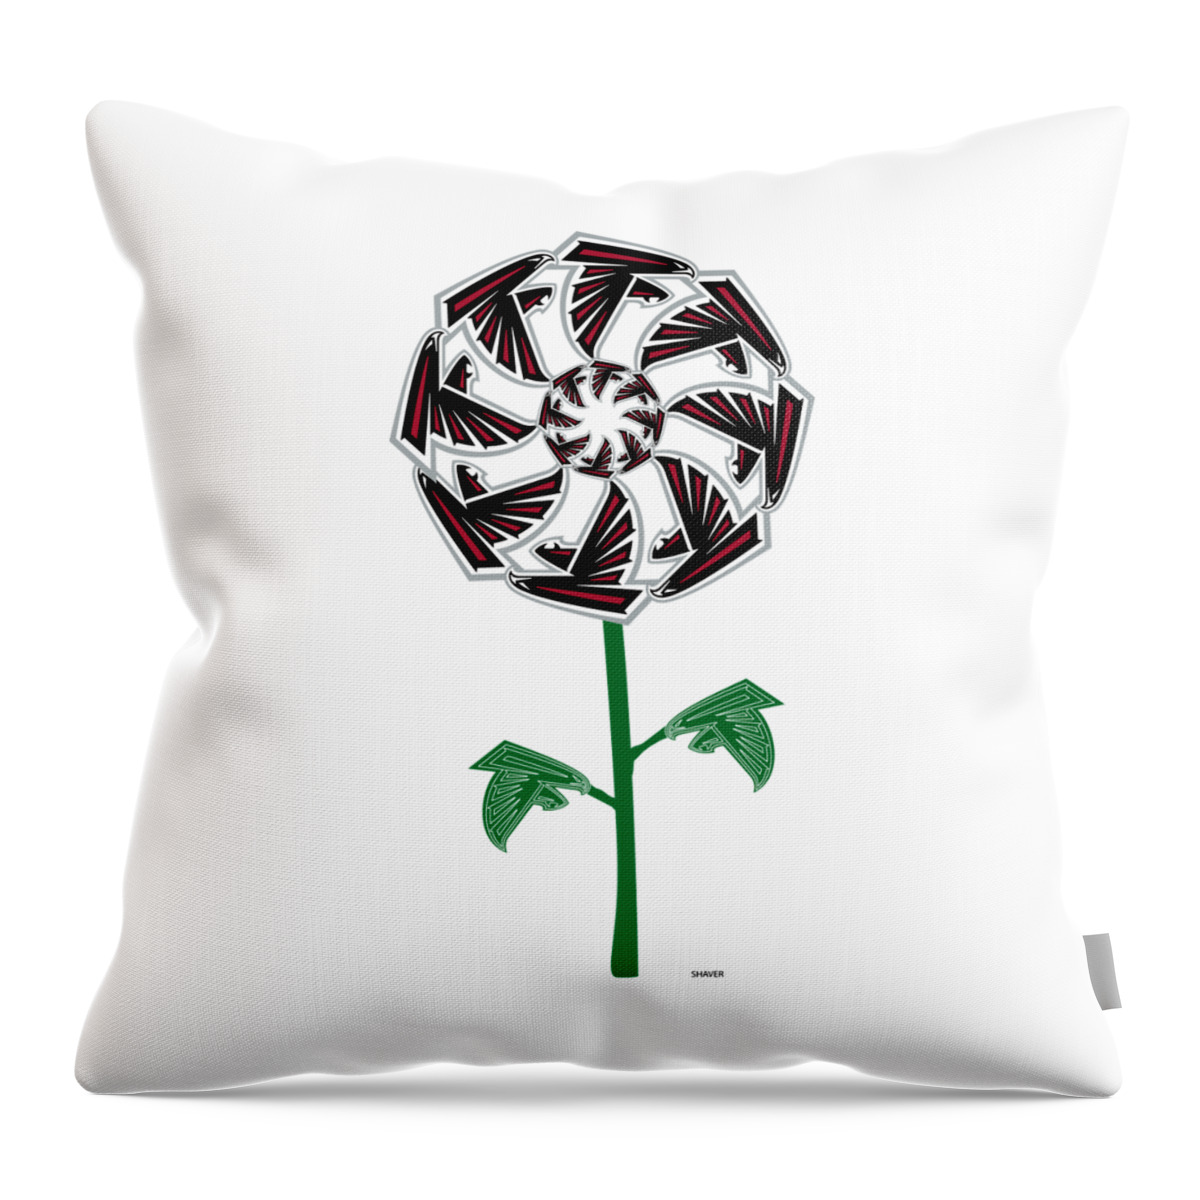 Nfl Throw Pillow featuring the digital art Atlanta Falcons - NFL Football Team Logo Flower Art by Steven Shaver